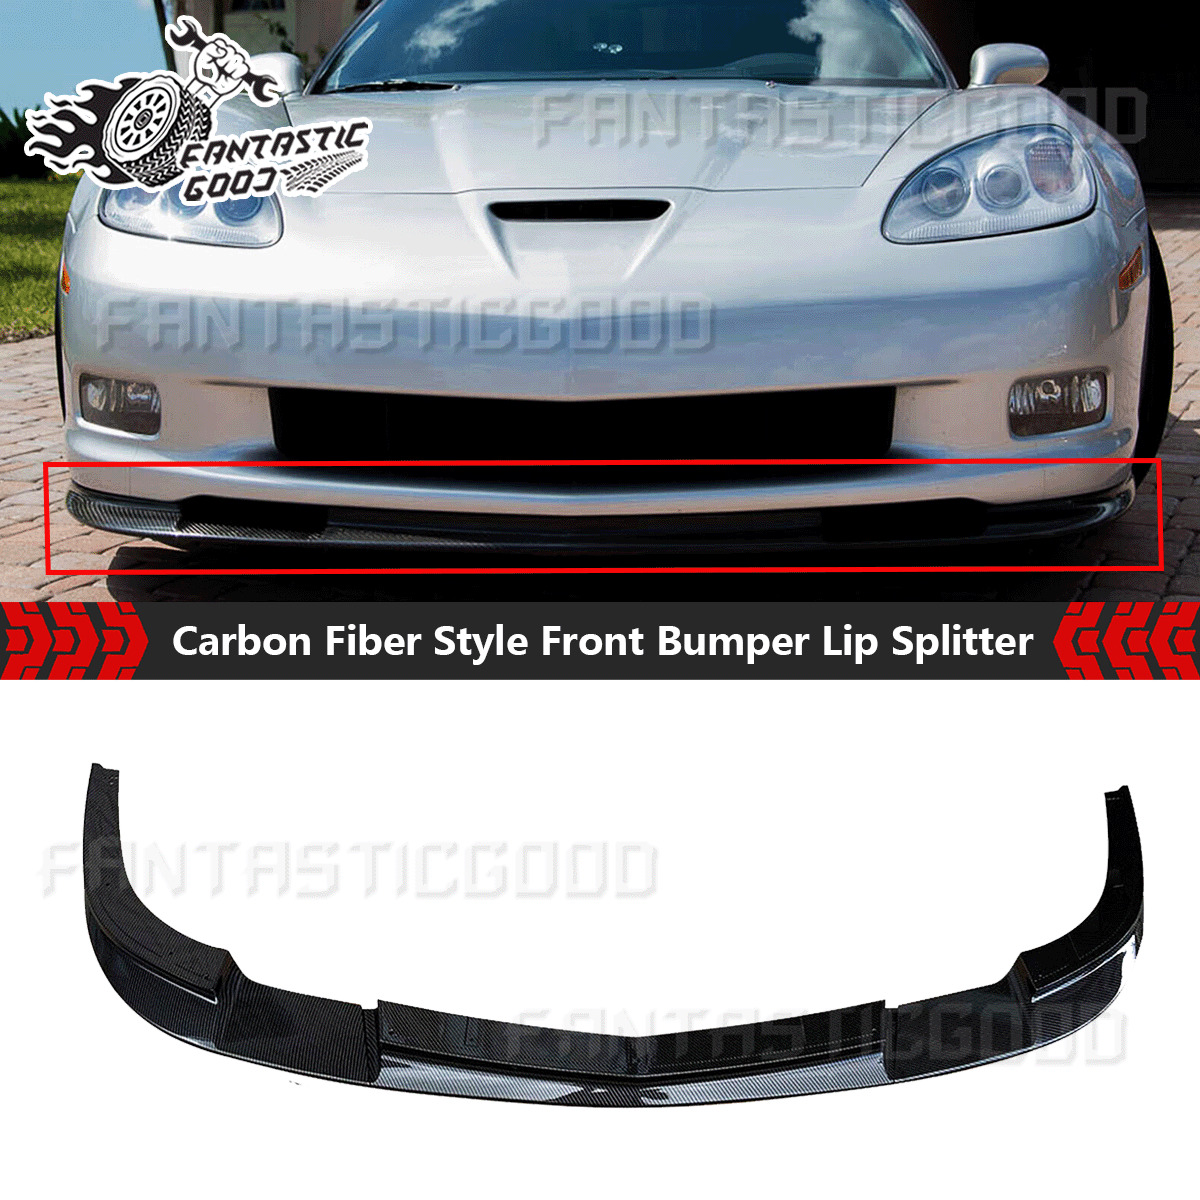 For Corvette C6 Z06 ZR1 GS 2005-13丨Carbon Fiber Style Front Bumper Lip Splitter